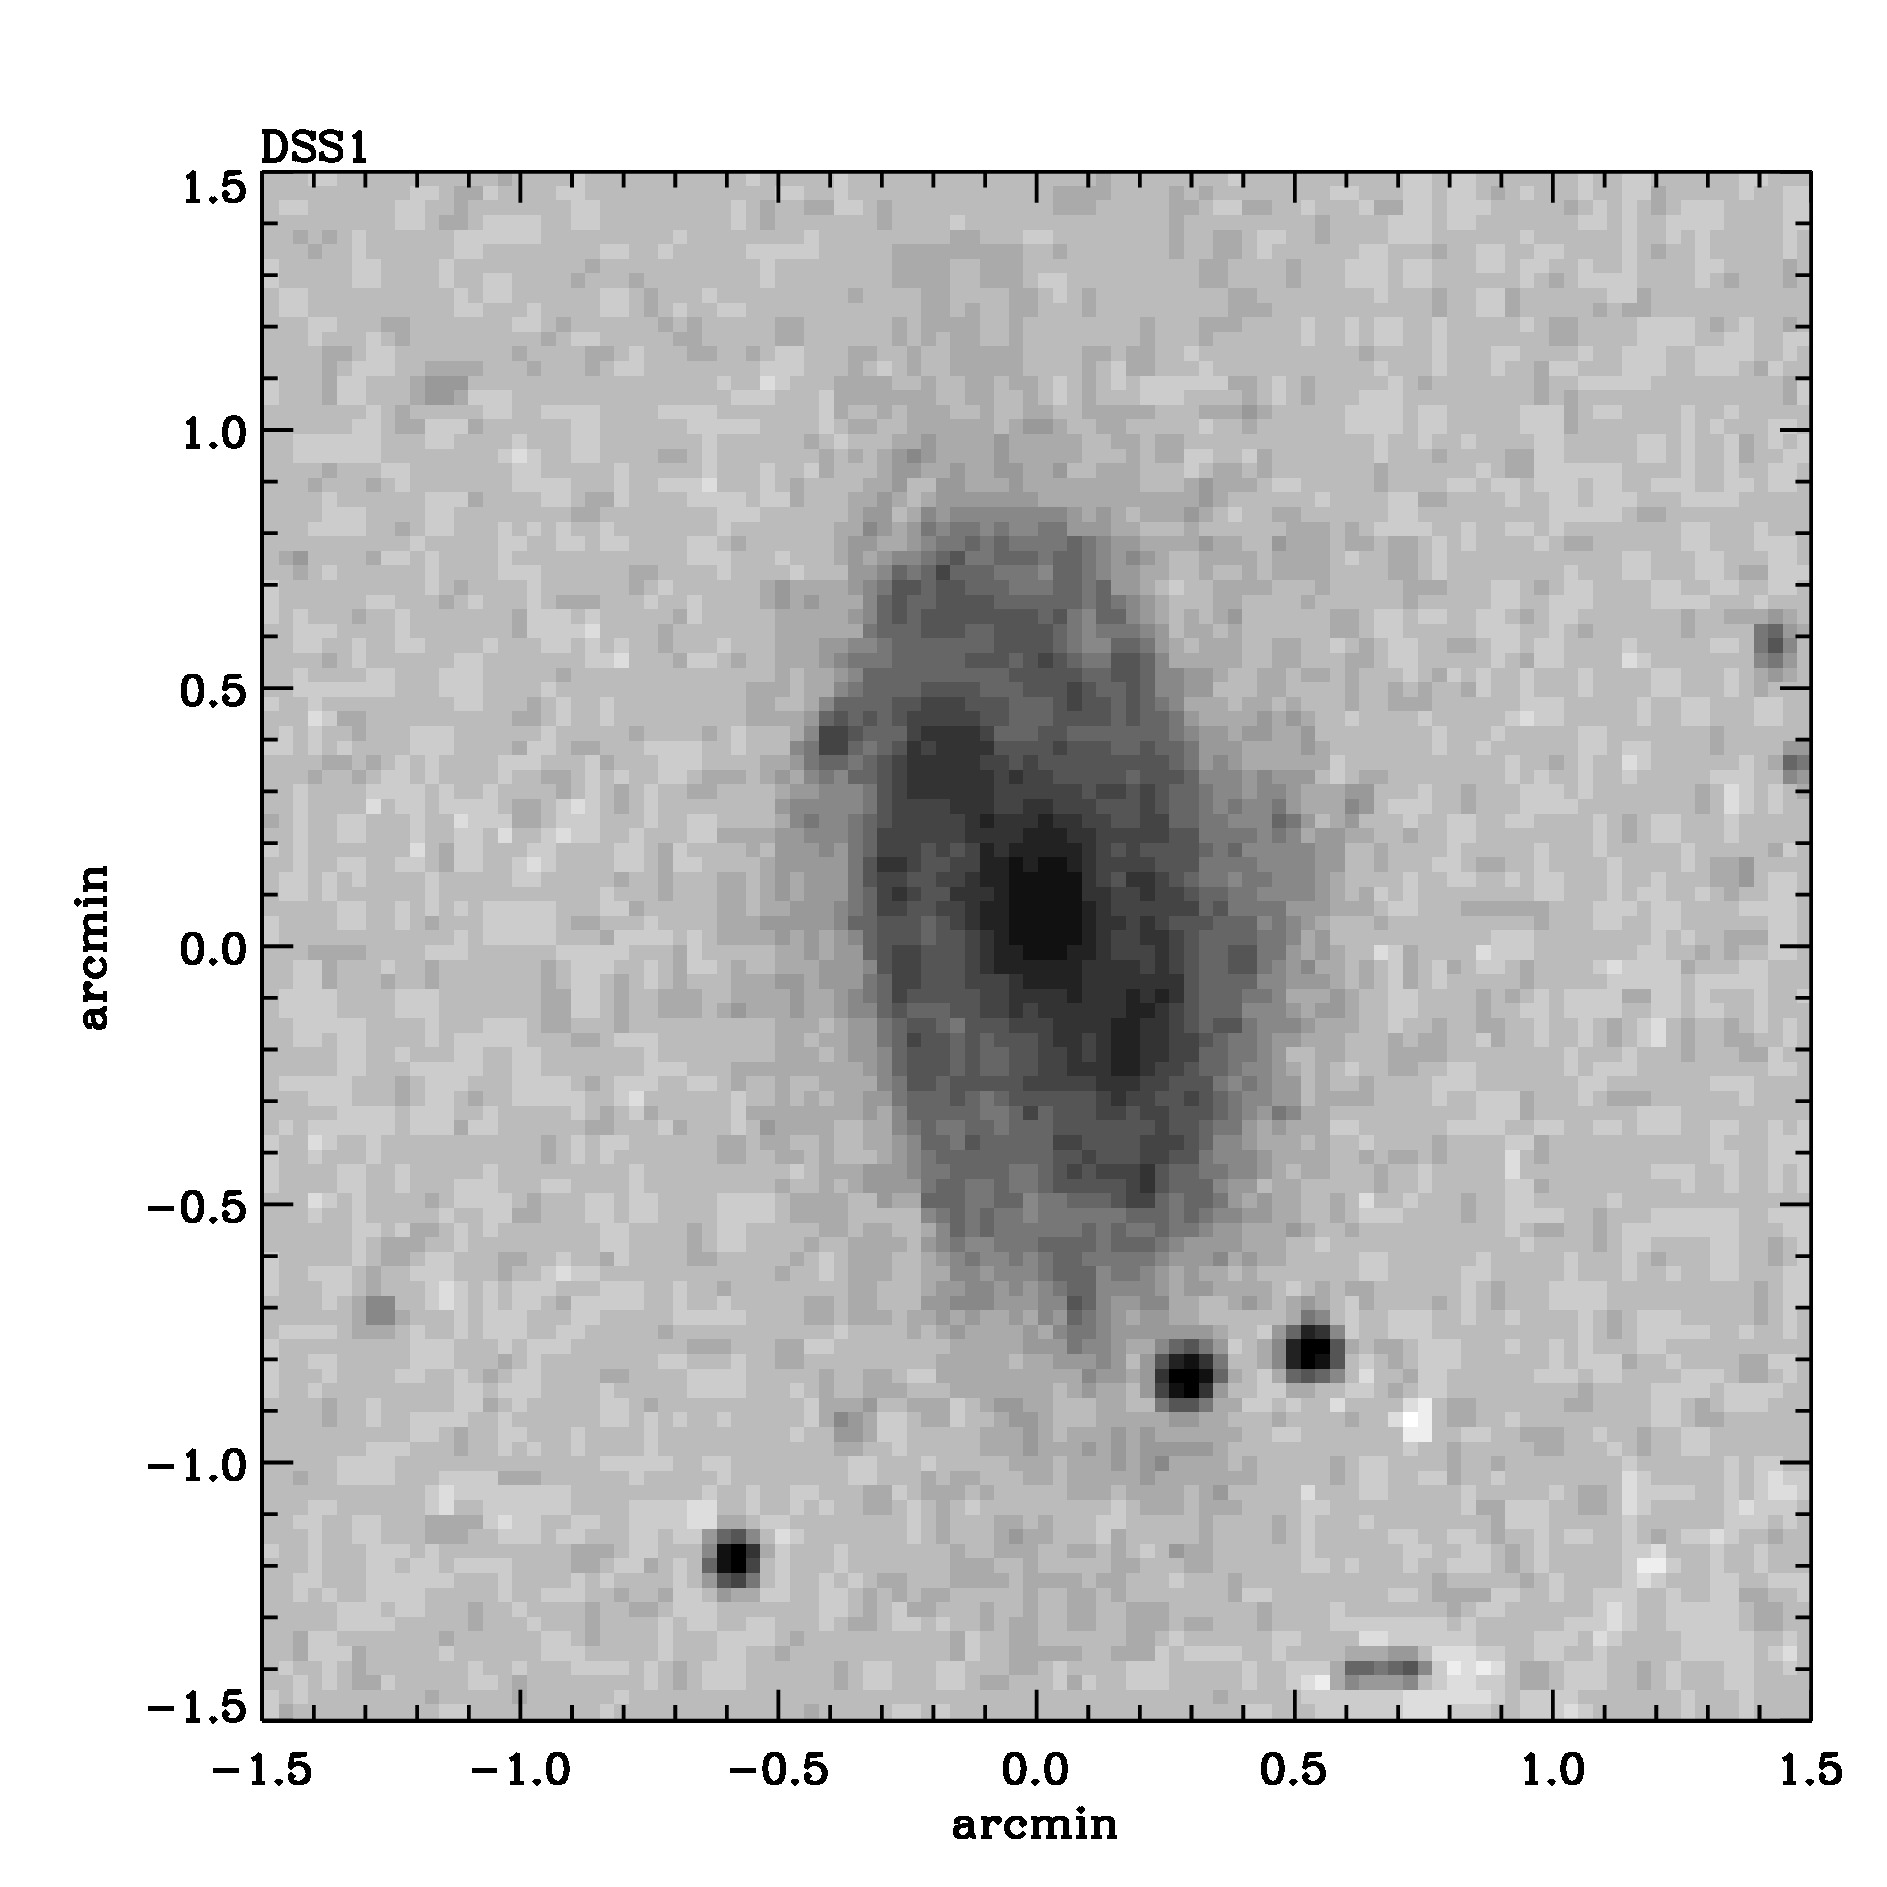 Optical image for SWIFT J0859.5+4457